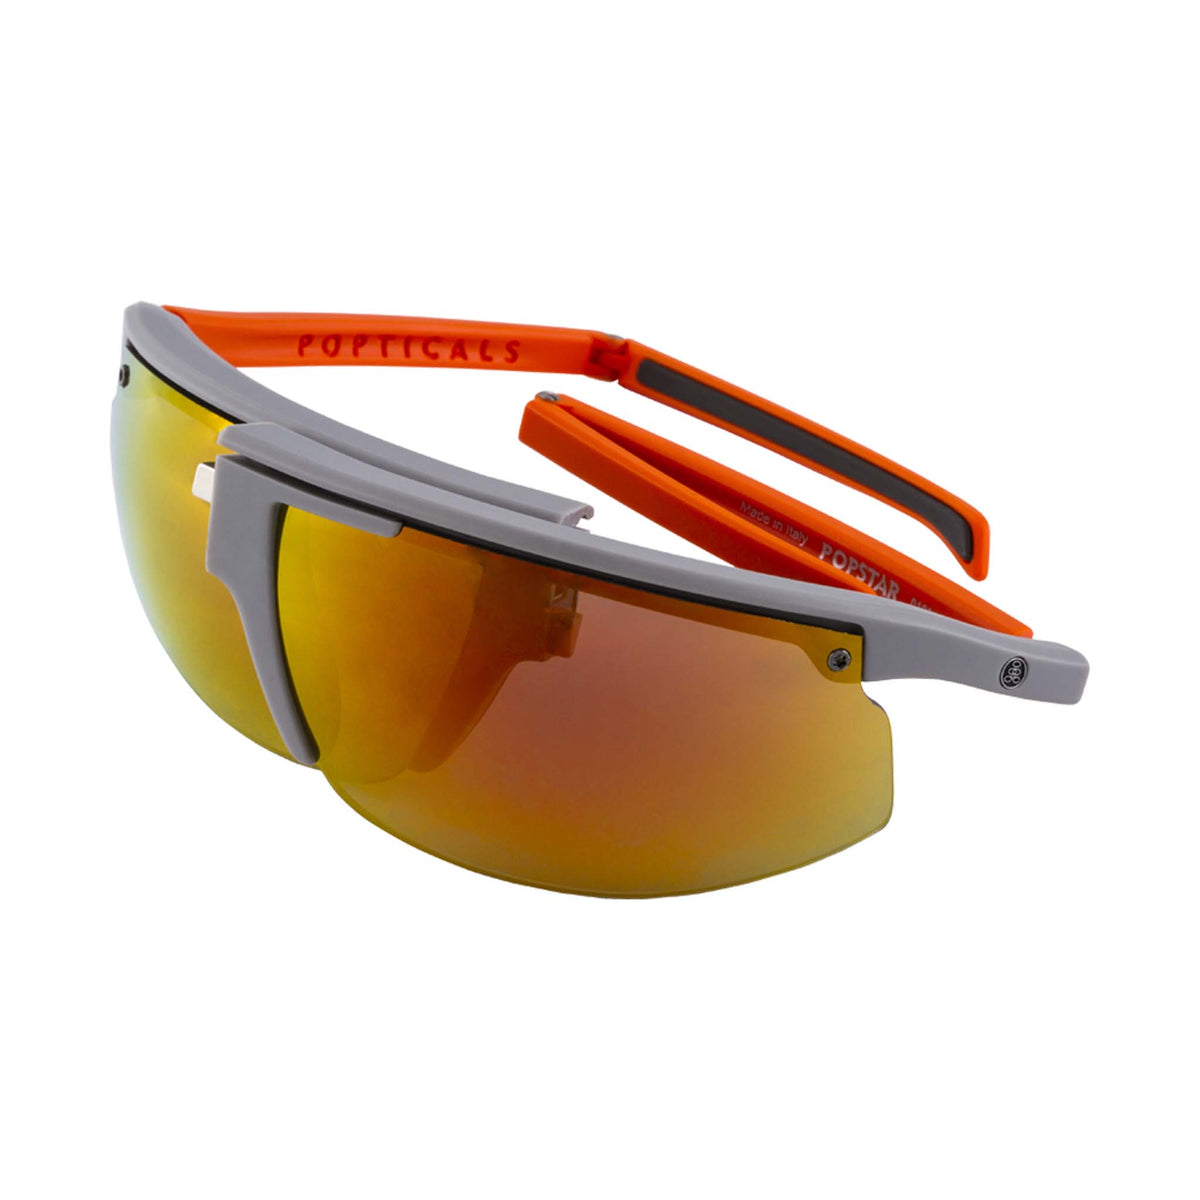 Popticals, Premium Compact Sunglasses, PopStar, 010040-OMGP, Polarized Sunglasses, Matte Gray/Orange Frame, Gray Lenses w/Orange Mirror Finish, Spider View